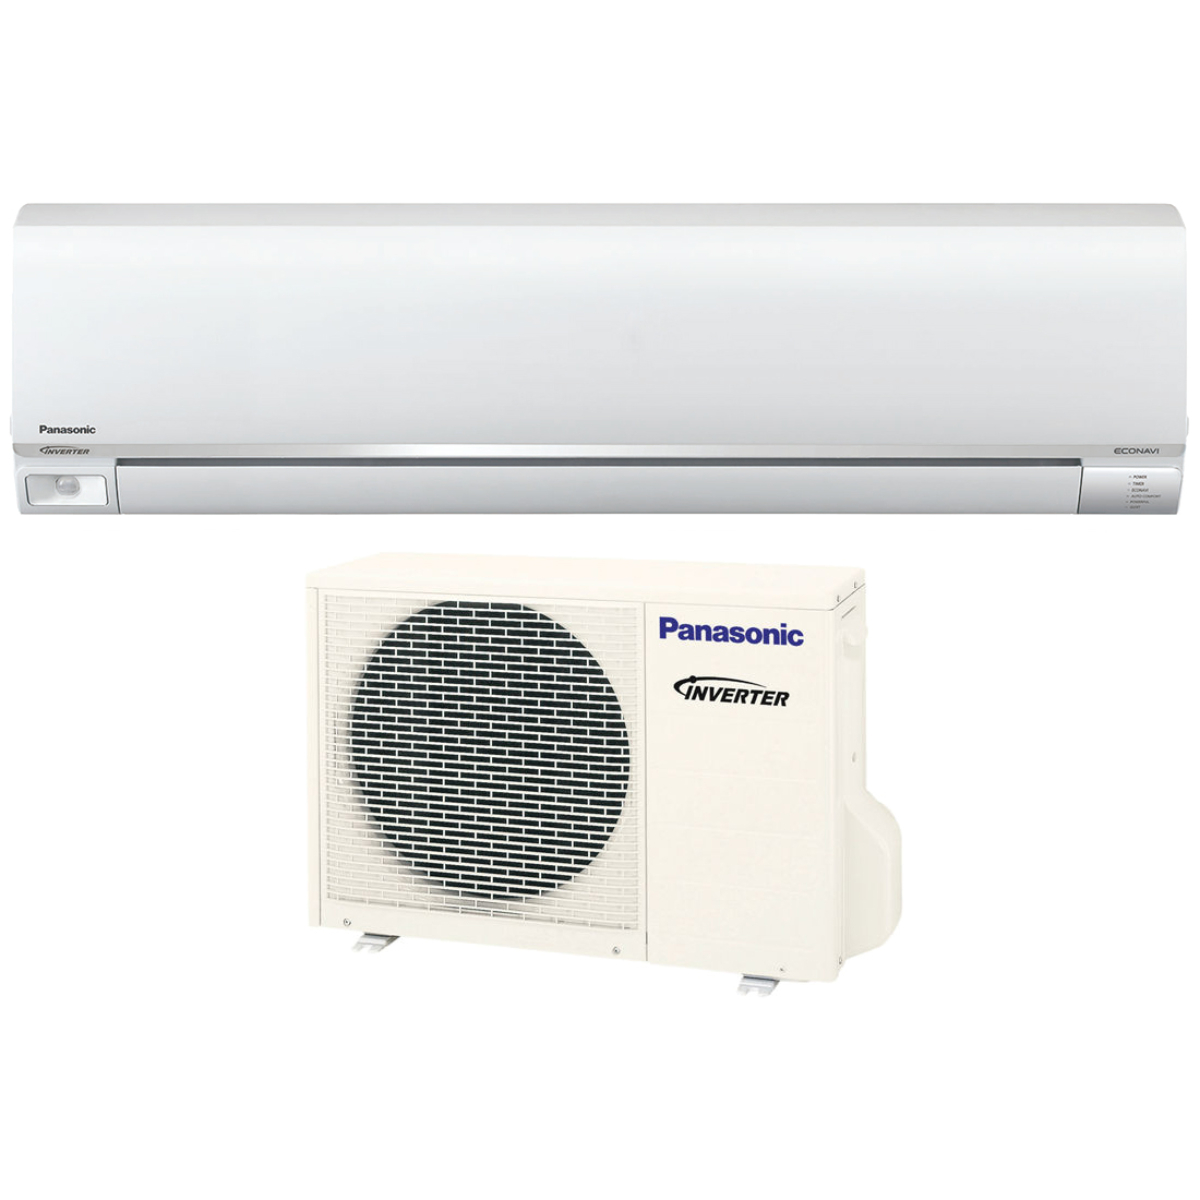 Panasonic Mini Split Air Conditioners - Nordics